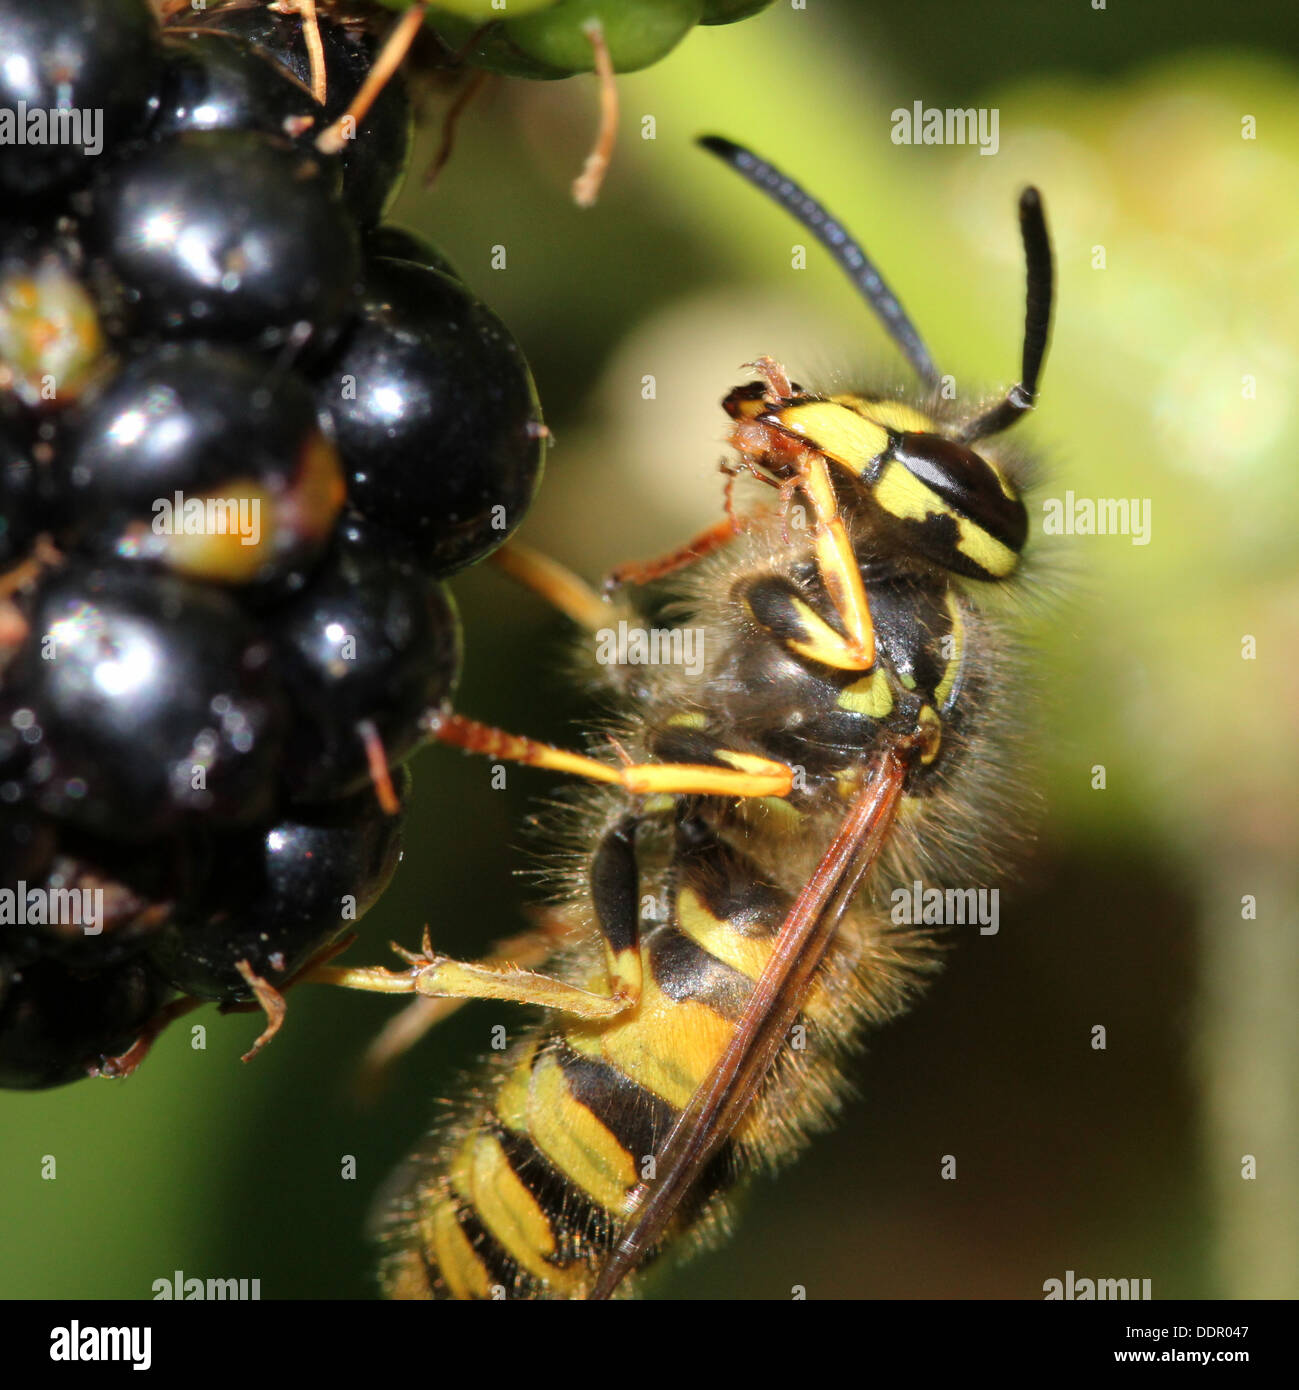 Common wasp ( Vespula vulgaris) feeding on a blackberry Stock Photo